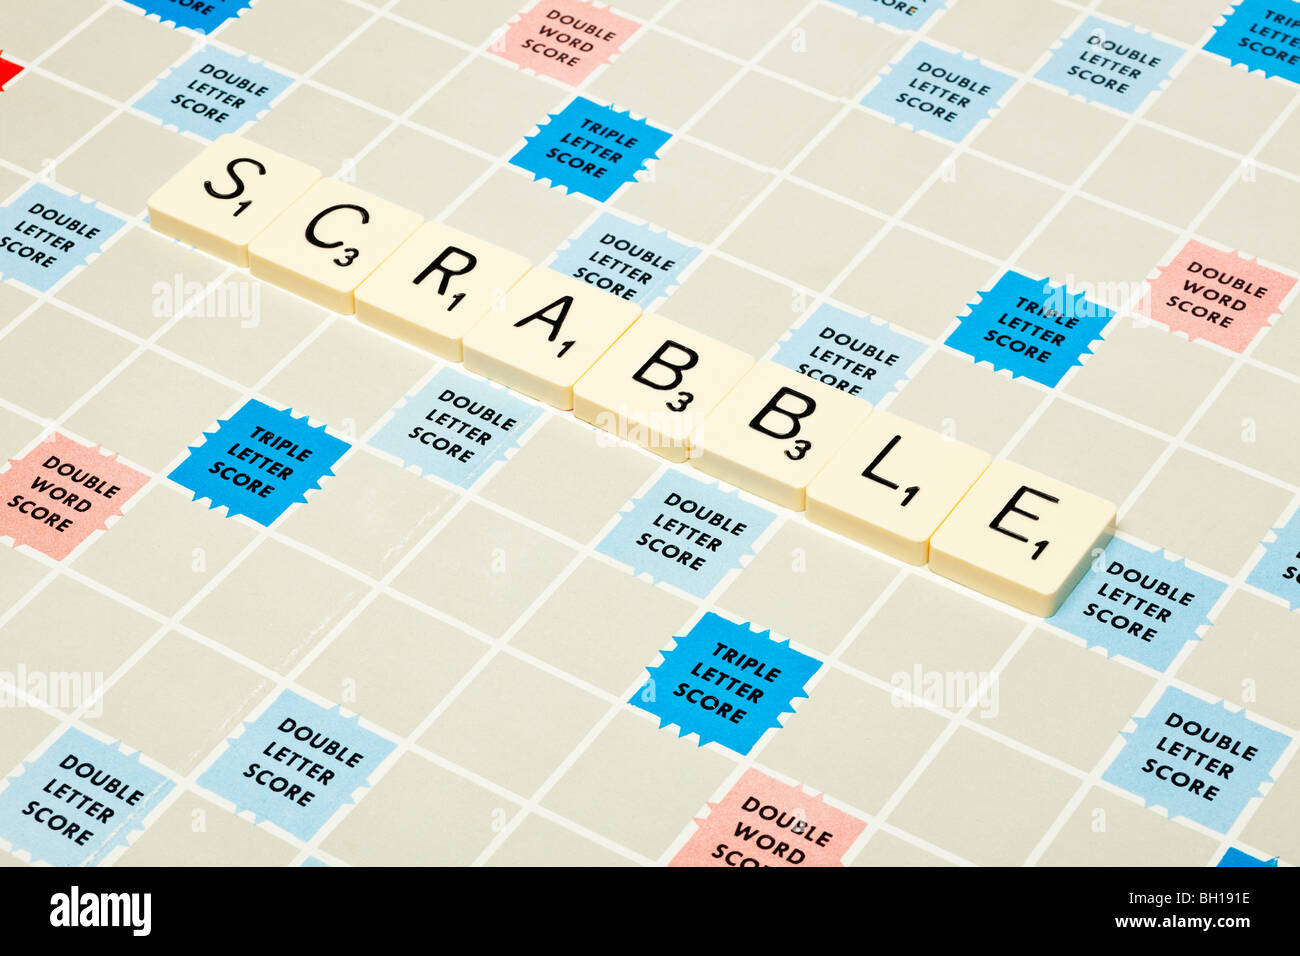 Scrabble Spielbrett mit Scrabble ausgeschrieben Stockfoto